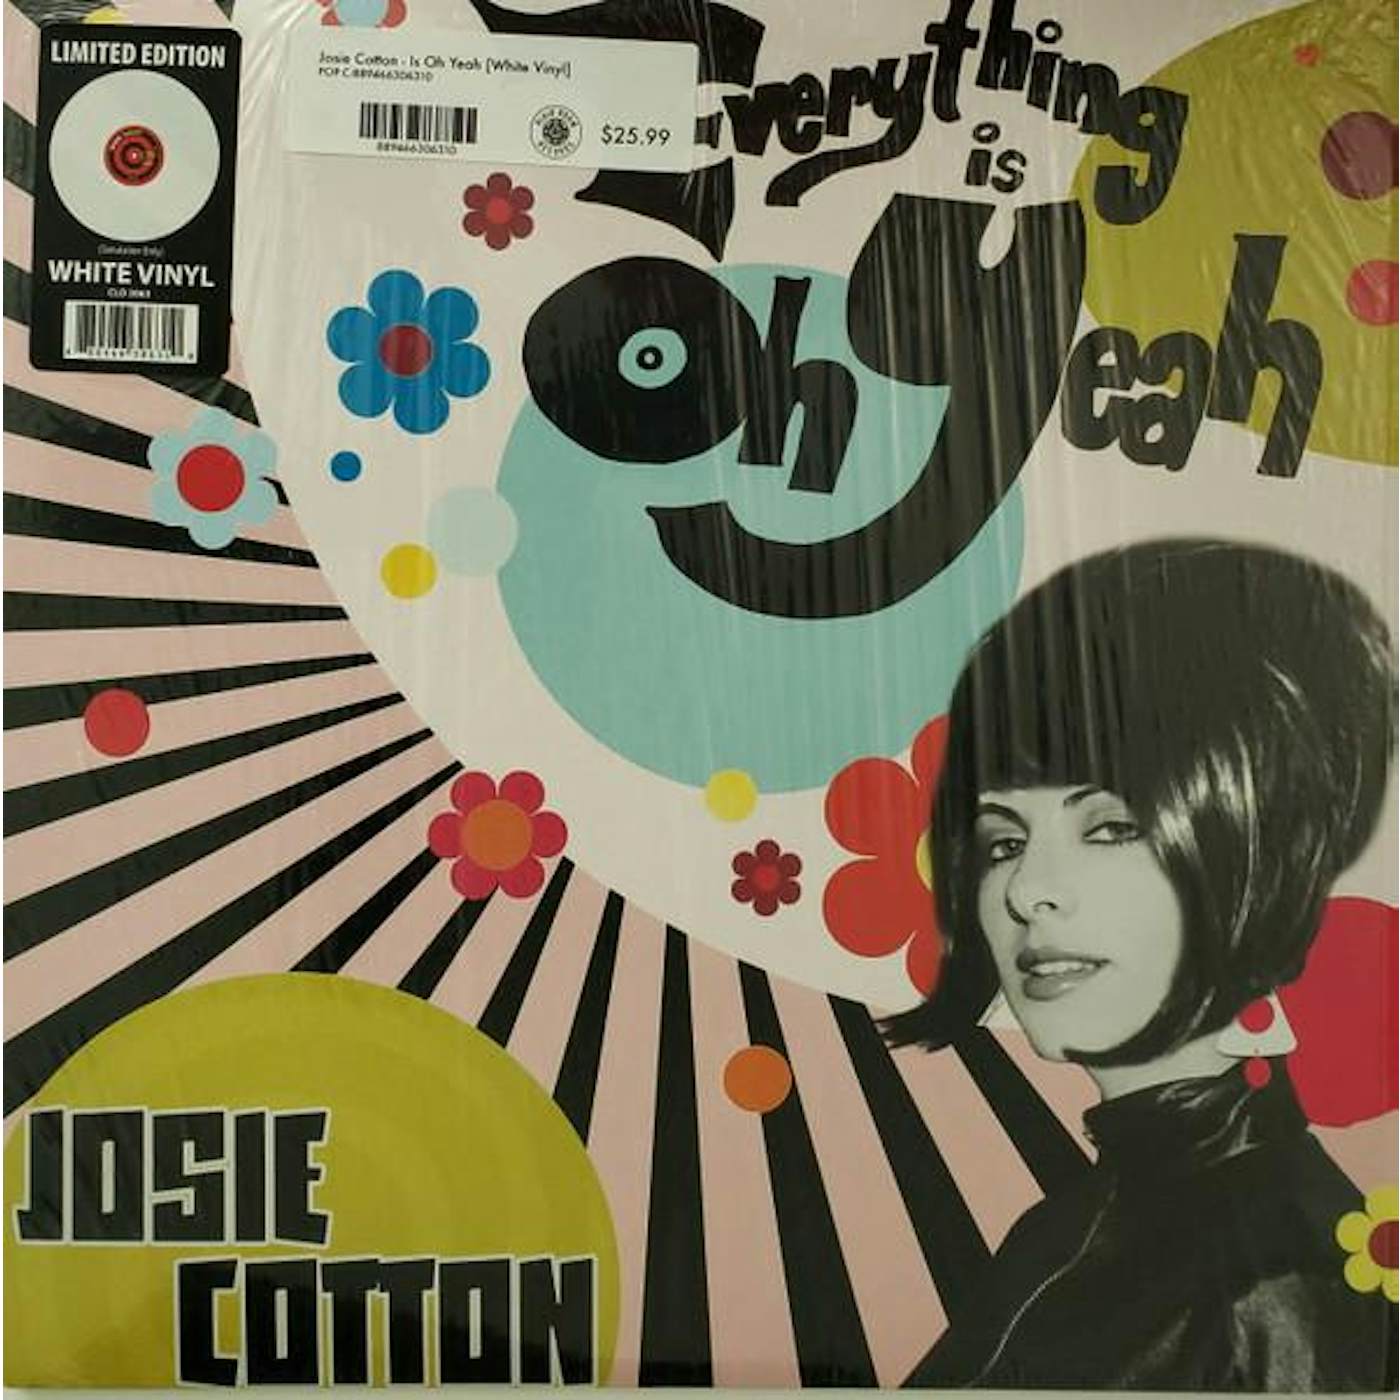 Josie Cotton EVERYTHING IS OH YEAH (WHITE VINYL) Vinyl Record